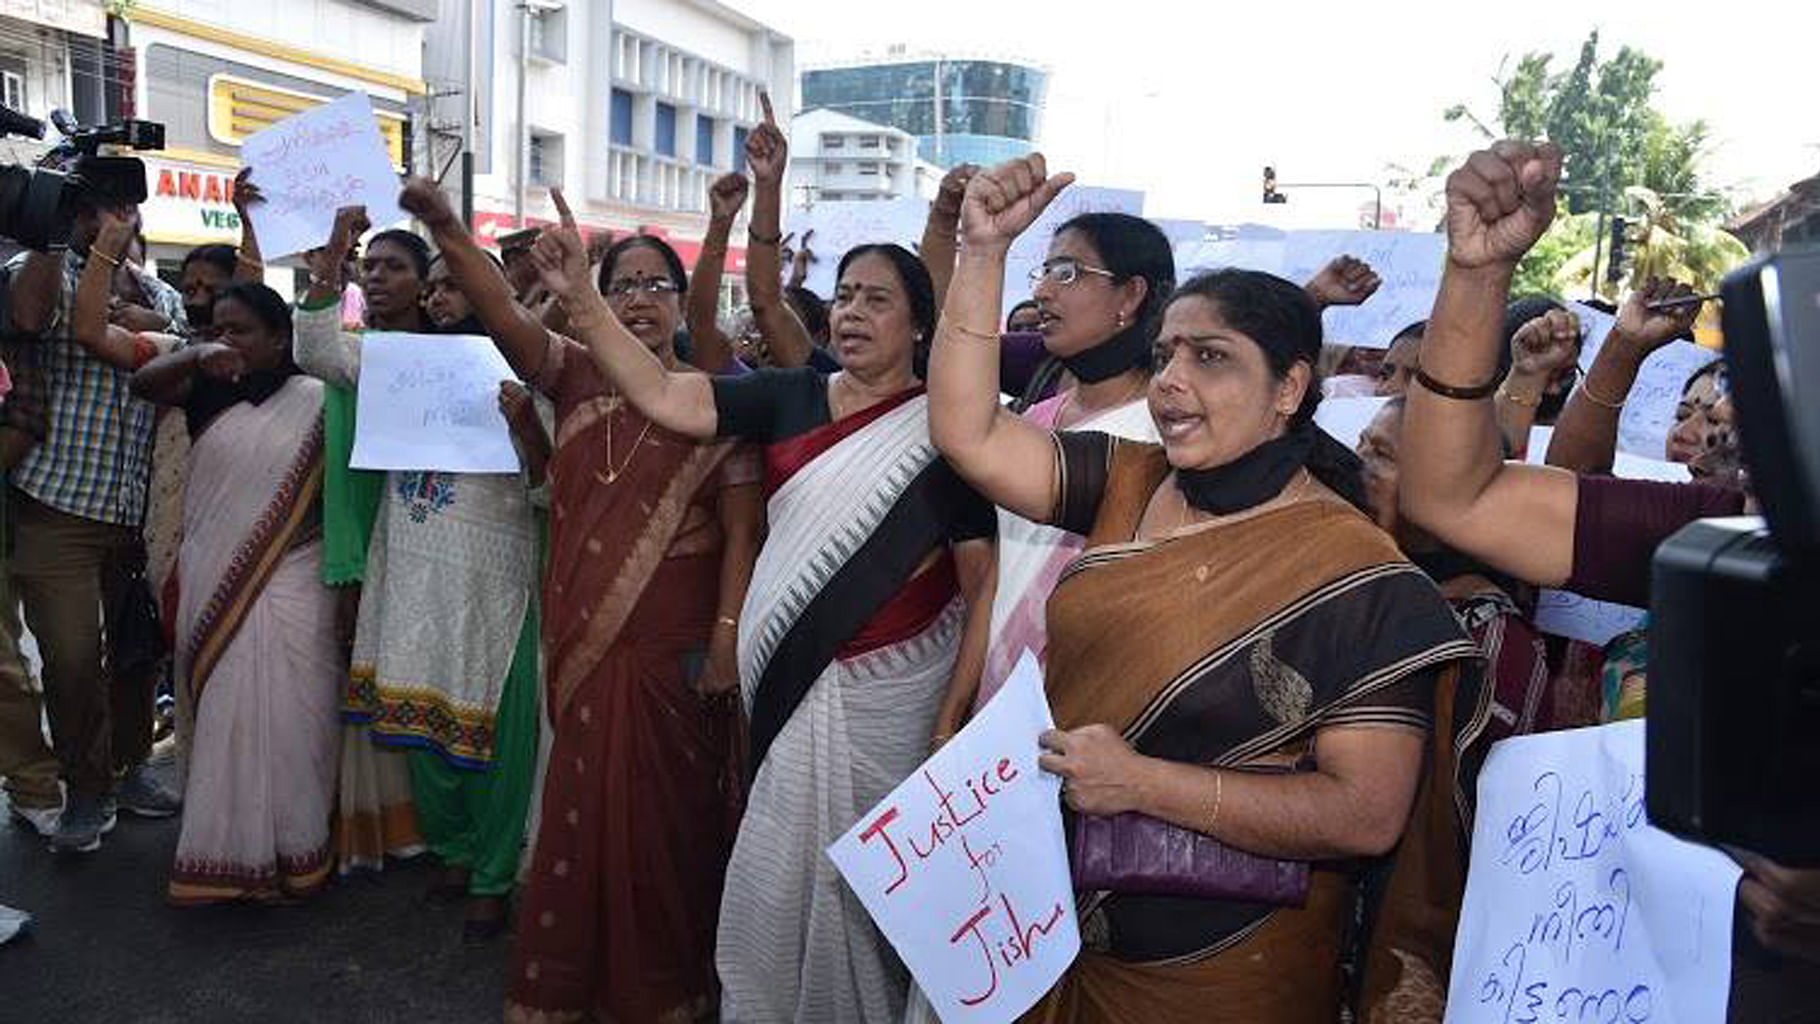 Women protest Jisha’s brutal rape and murder. (Photo Courtesy: <a href="https://www.facebook.com/cpimcc/?fref=photo">CPIM’s Facebook page</a>)